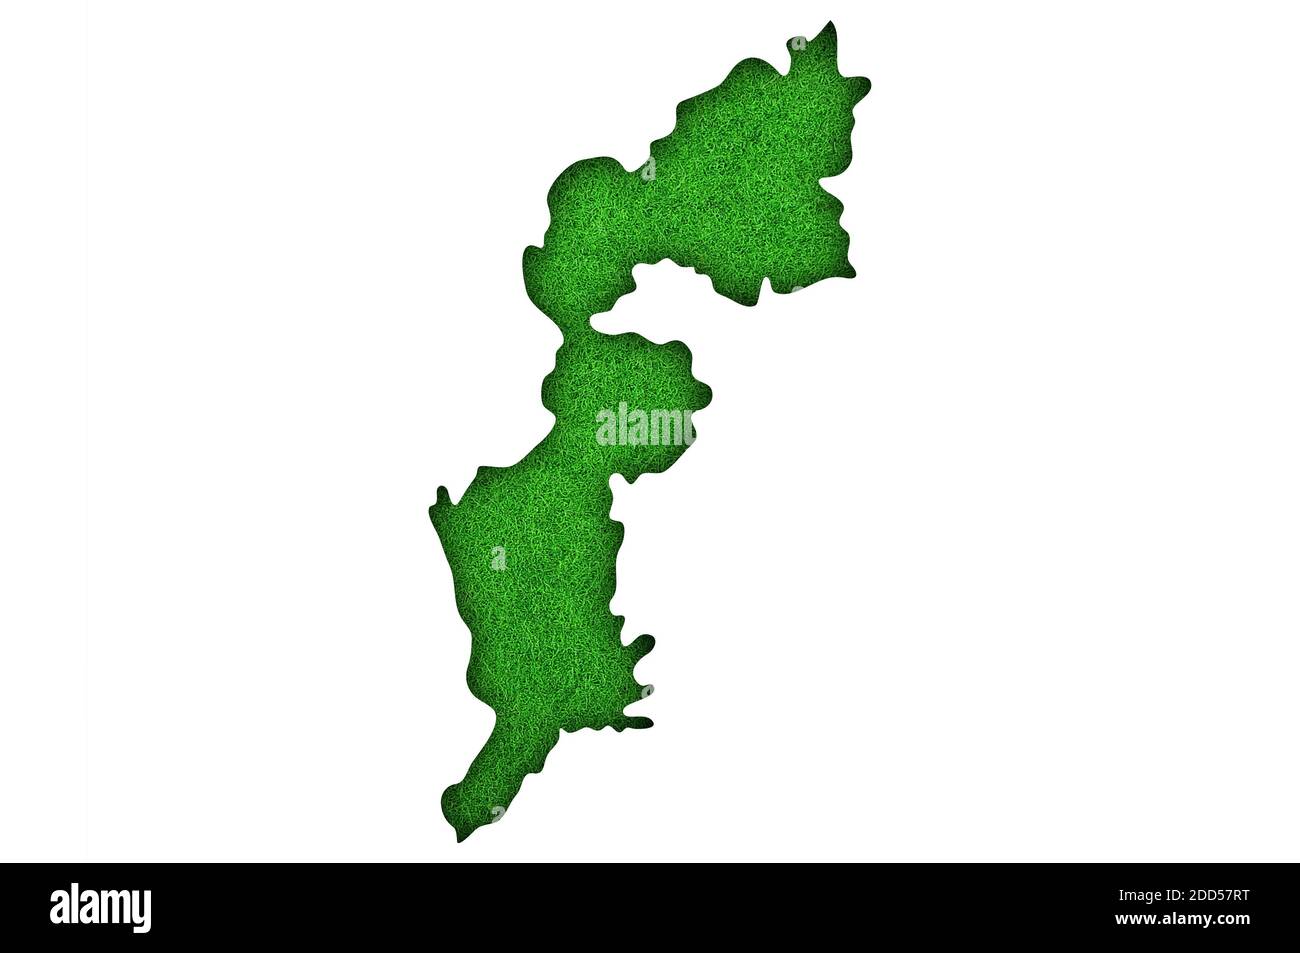 Map of Burgenland on green felt Stock Photo